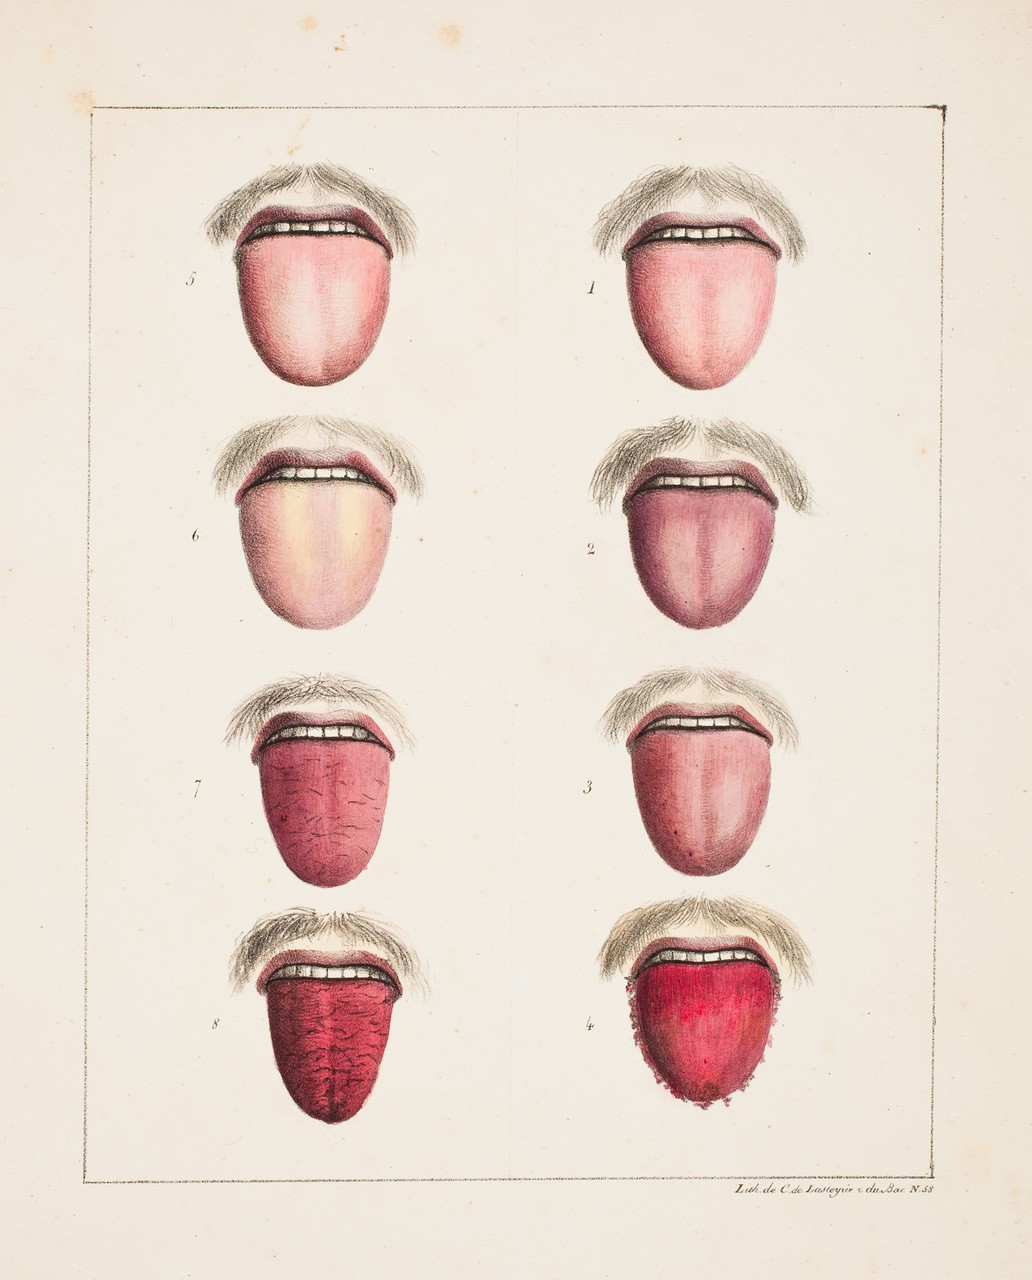 “Observations sur la Fièvre Jaune, faites à Cadix, en 1819” (litografia sulle manifestazioni facciali della febbre gialla), di Estienne Pariset (1770-1847) e André Mazet (1795-1821).